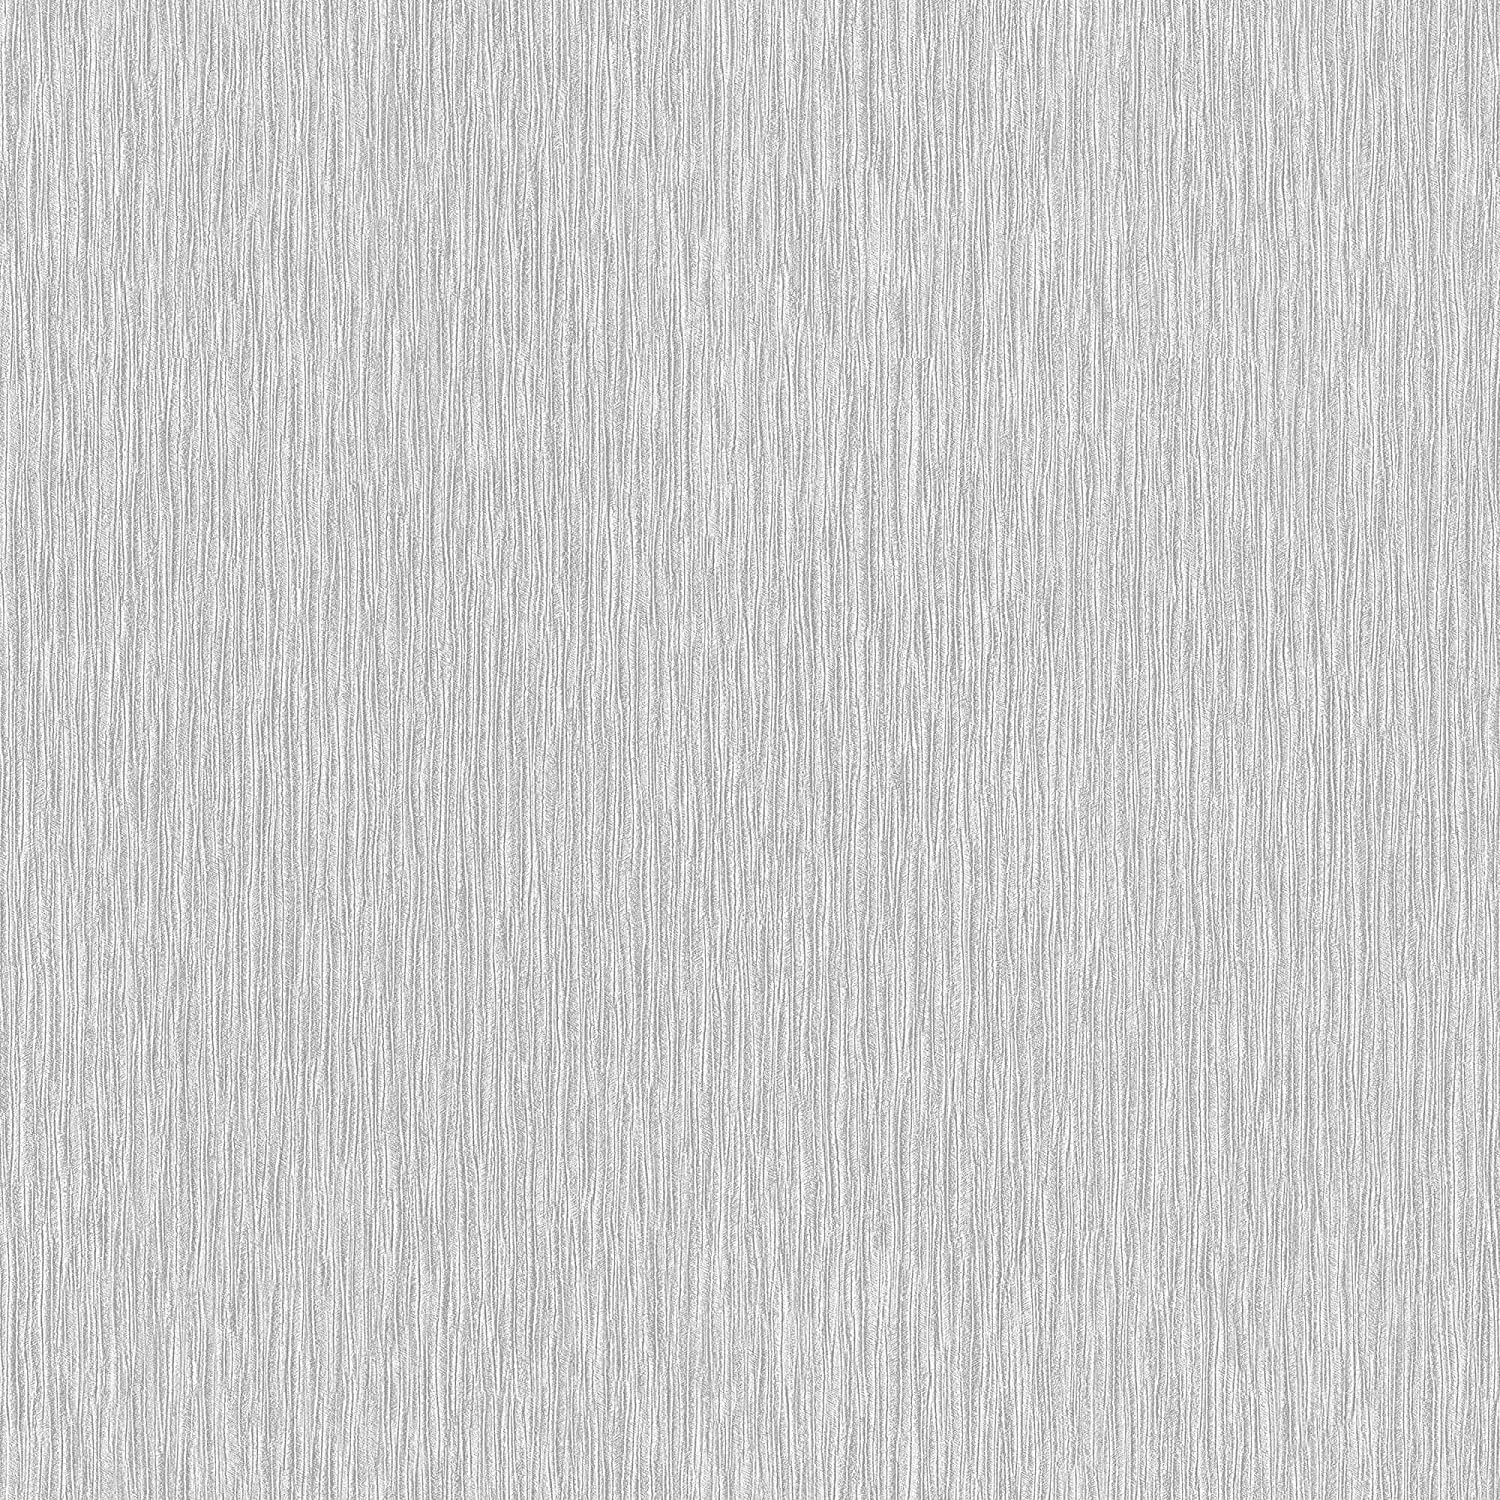 Newroom Wallpaper Stripes Silver Stripes Baroque Non-Woven Wallpaper with Wallpaper Guide [English Language not Guaranteed]